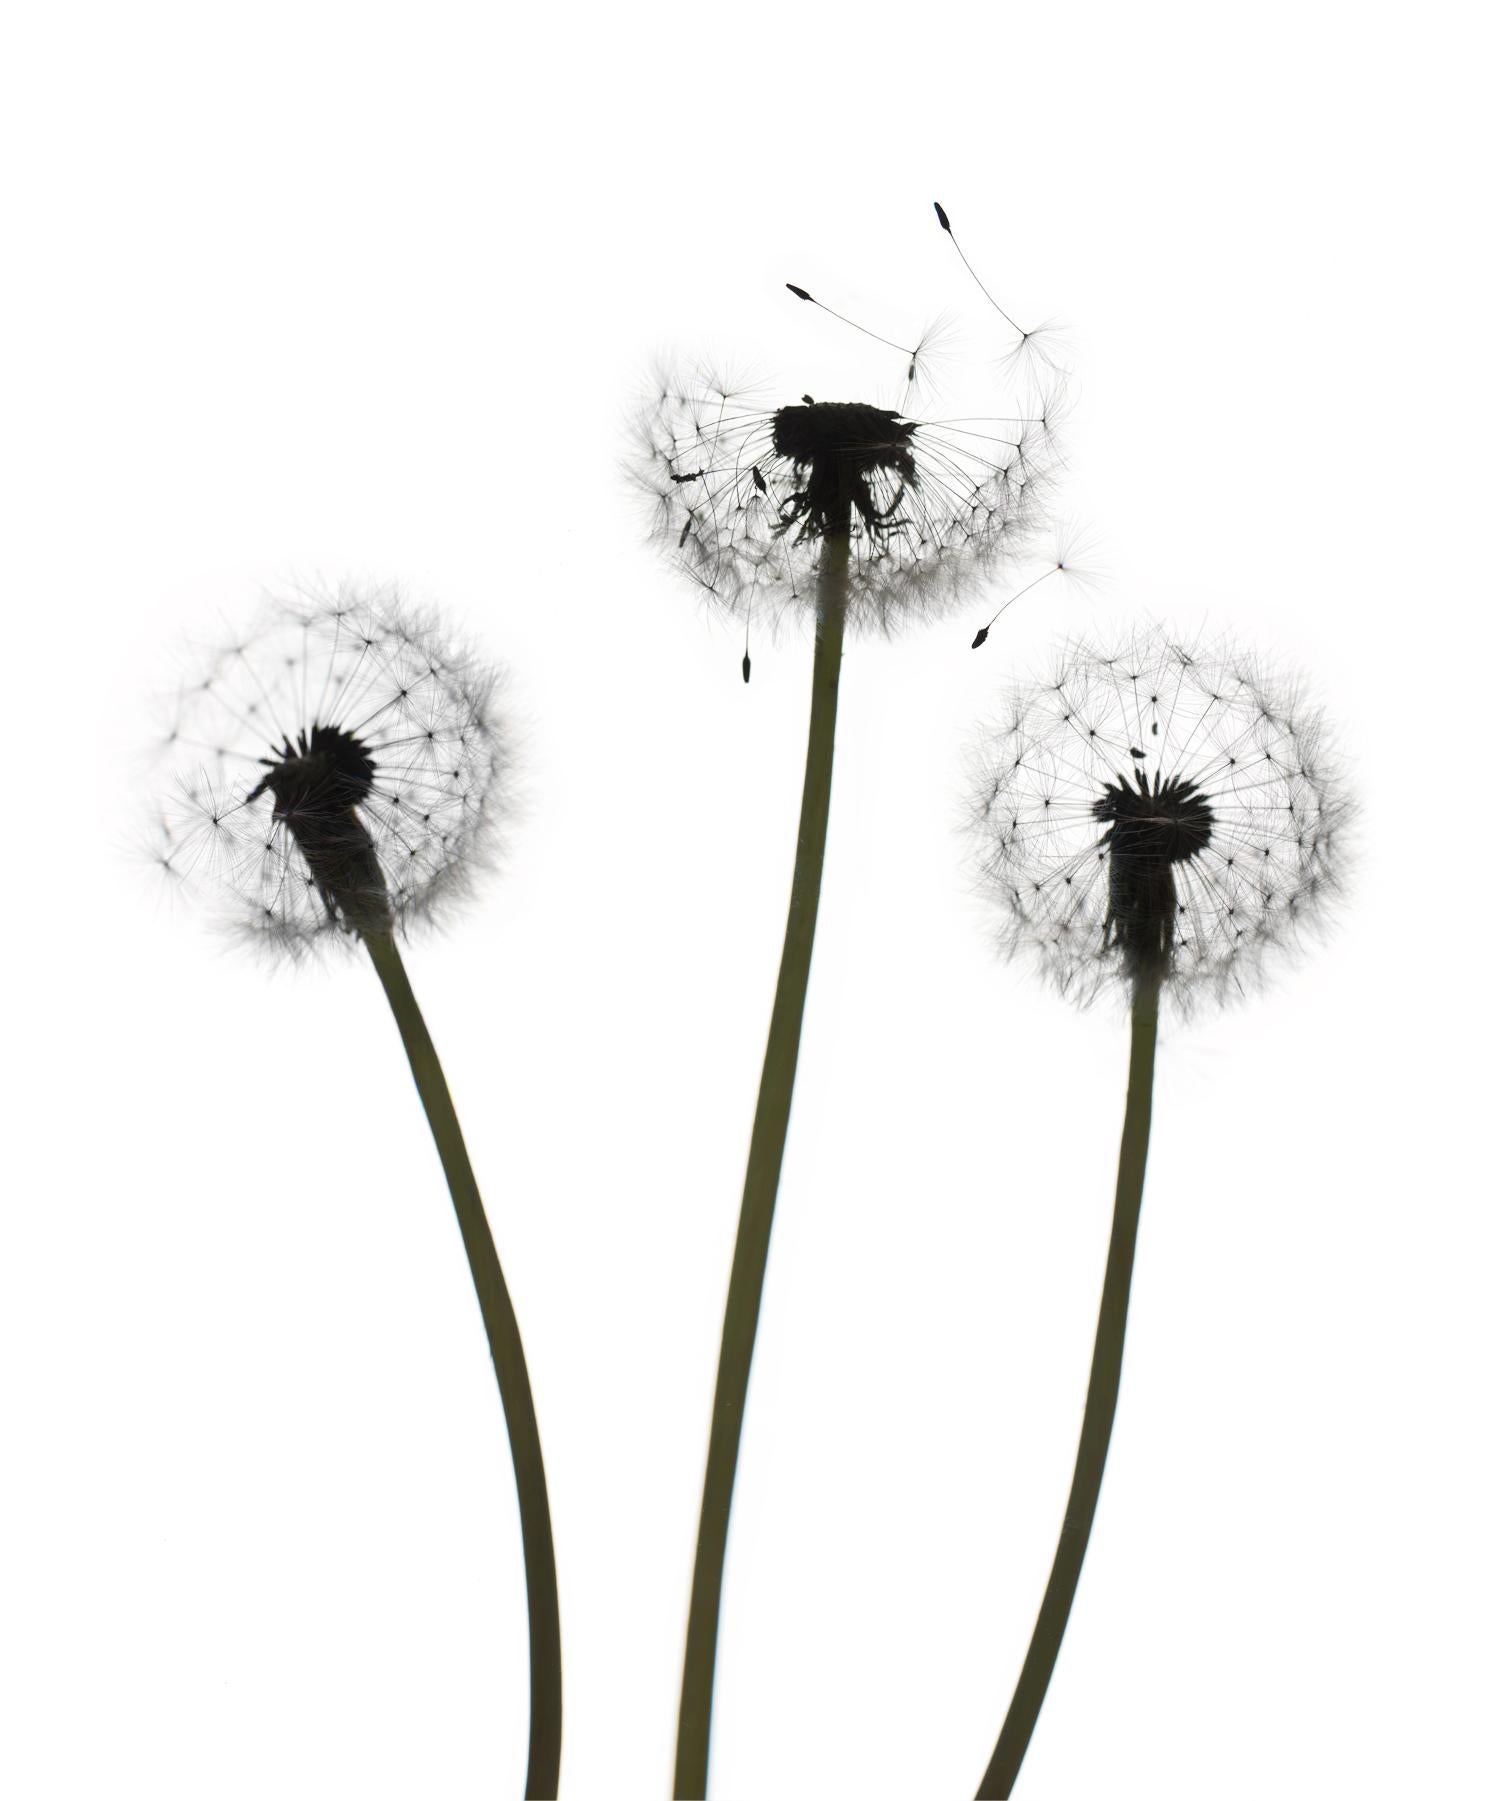 Untitled- Flower 147 (White): Still Life Photograph of Dandelion Trio